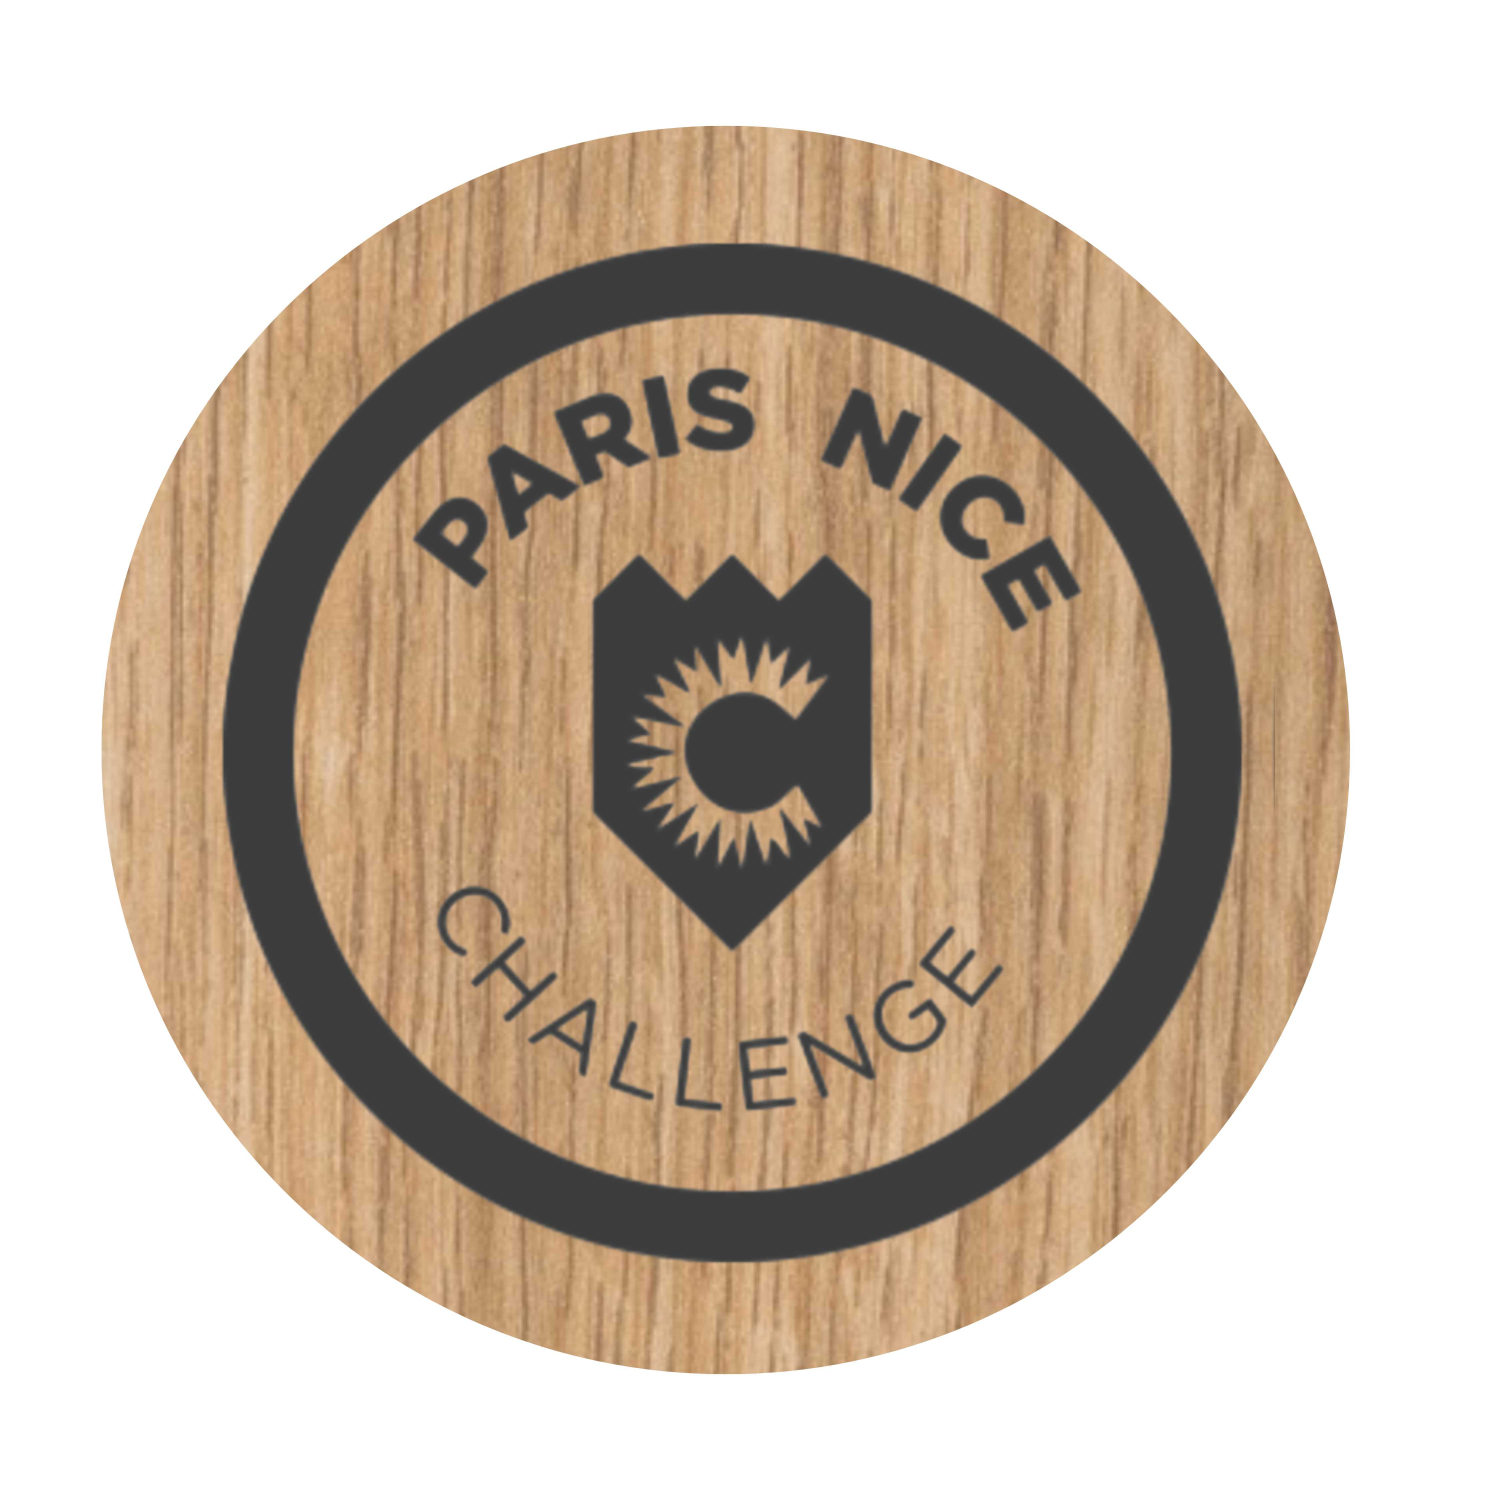 Magnet Paris-Nice Challenge BLACK LOGO